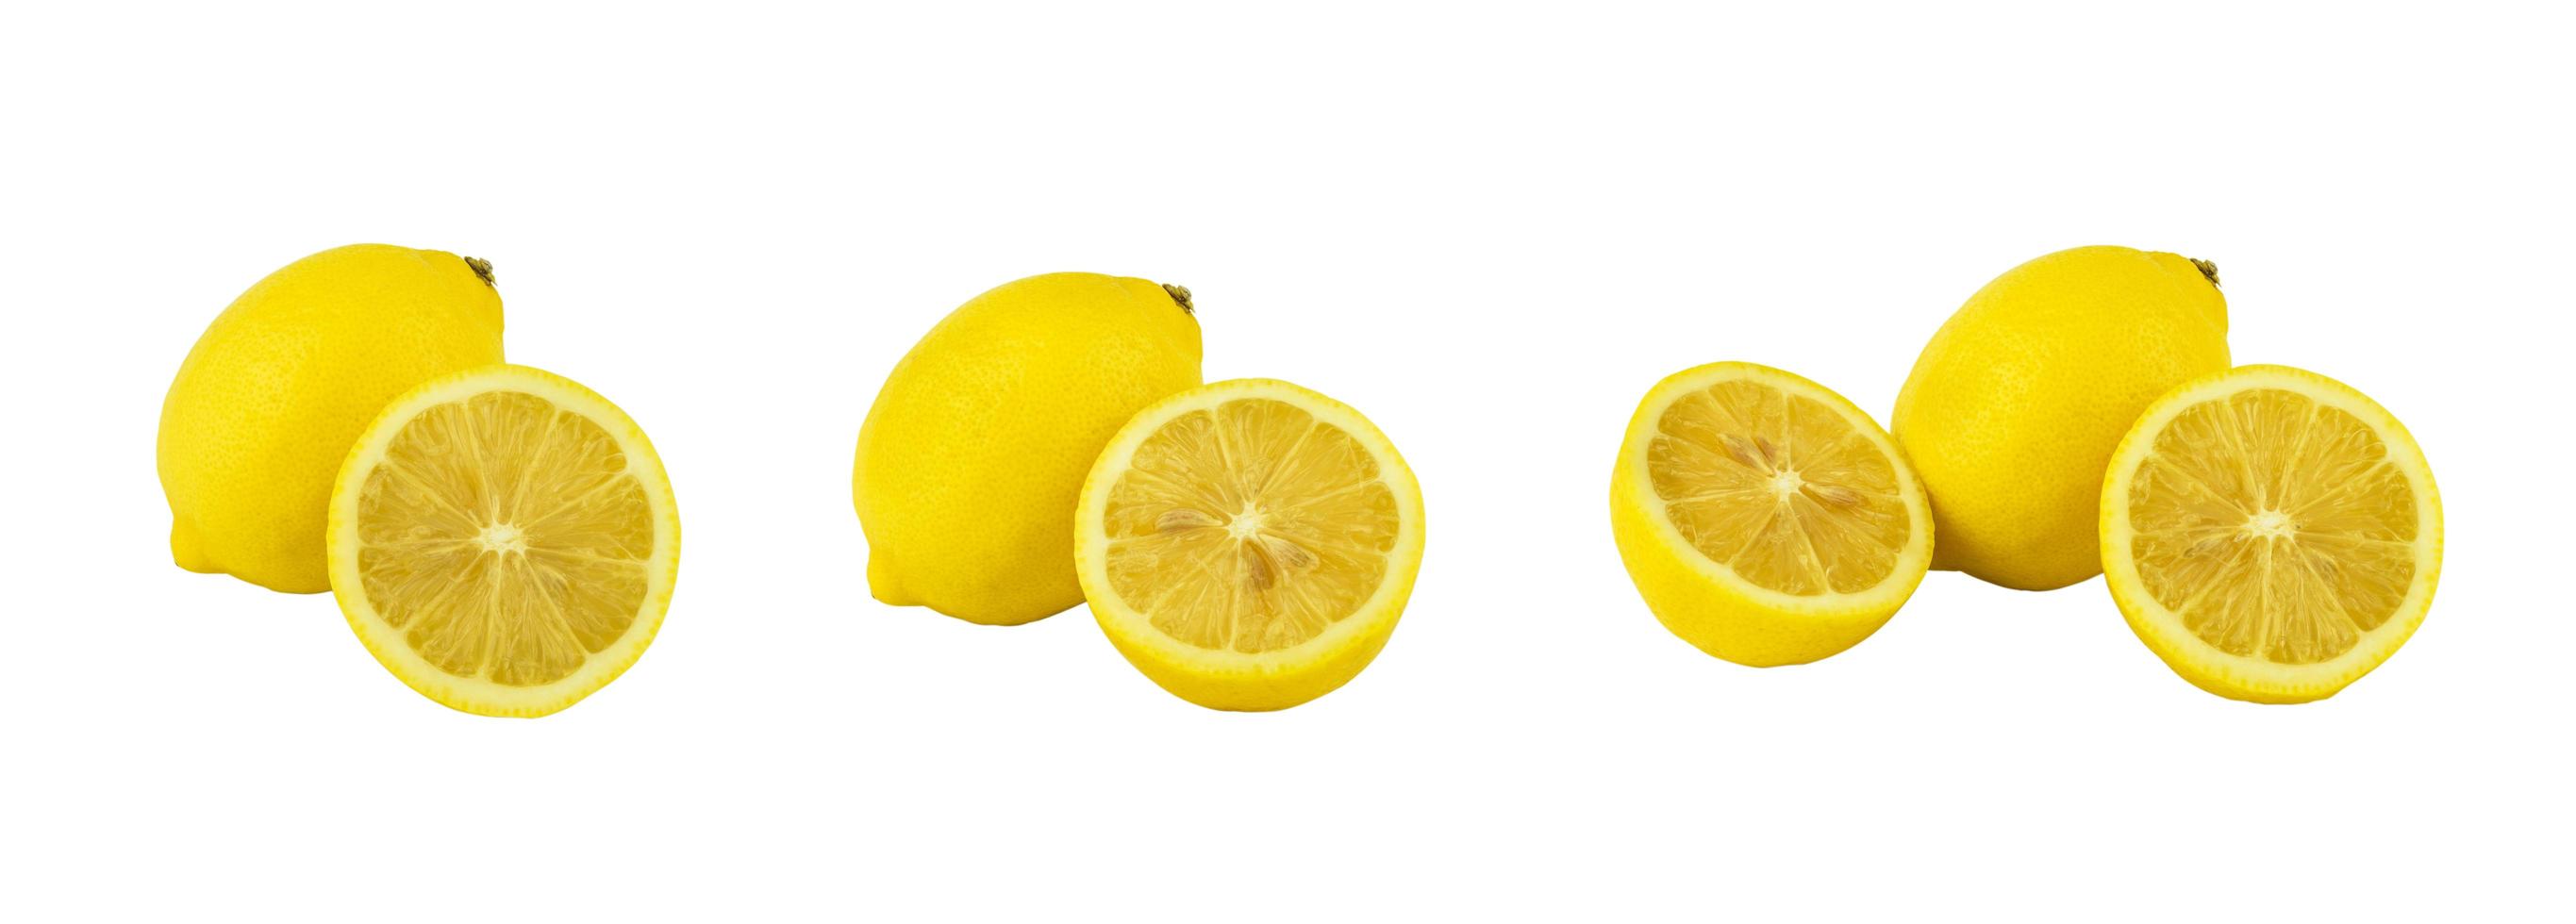 lemon fruit set clipping path photo